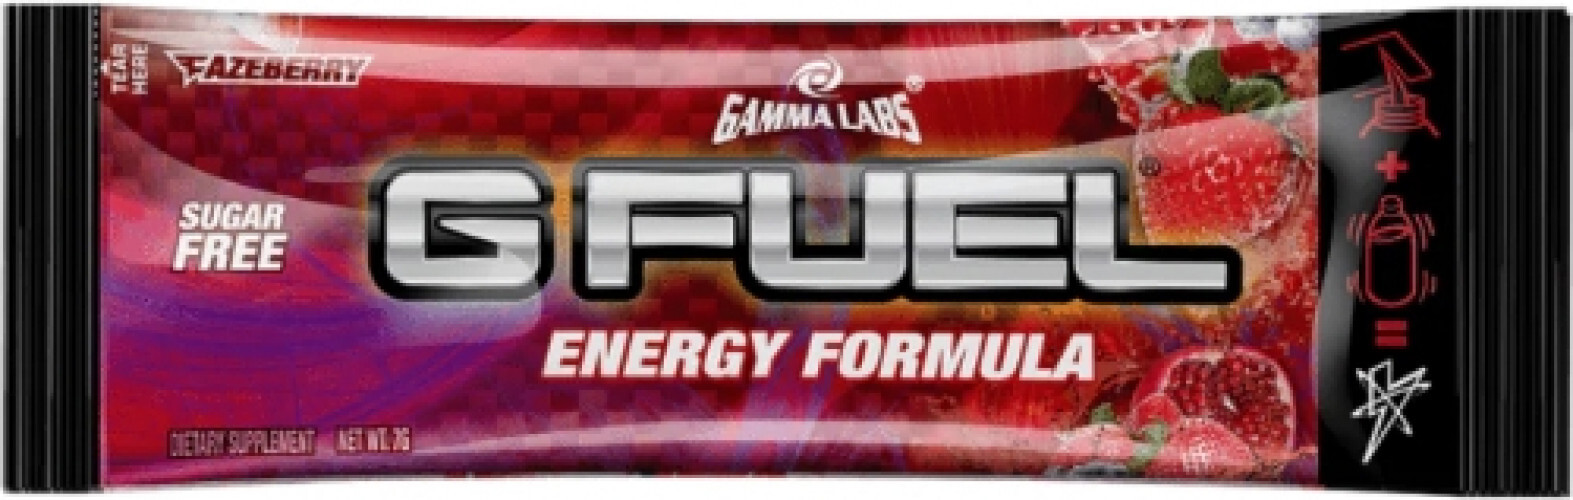 GFuel GFuel Energy Formula - Fazeberry Sample